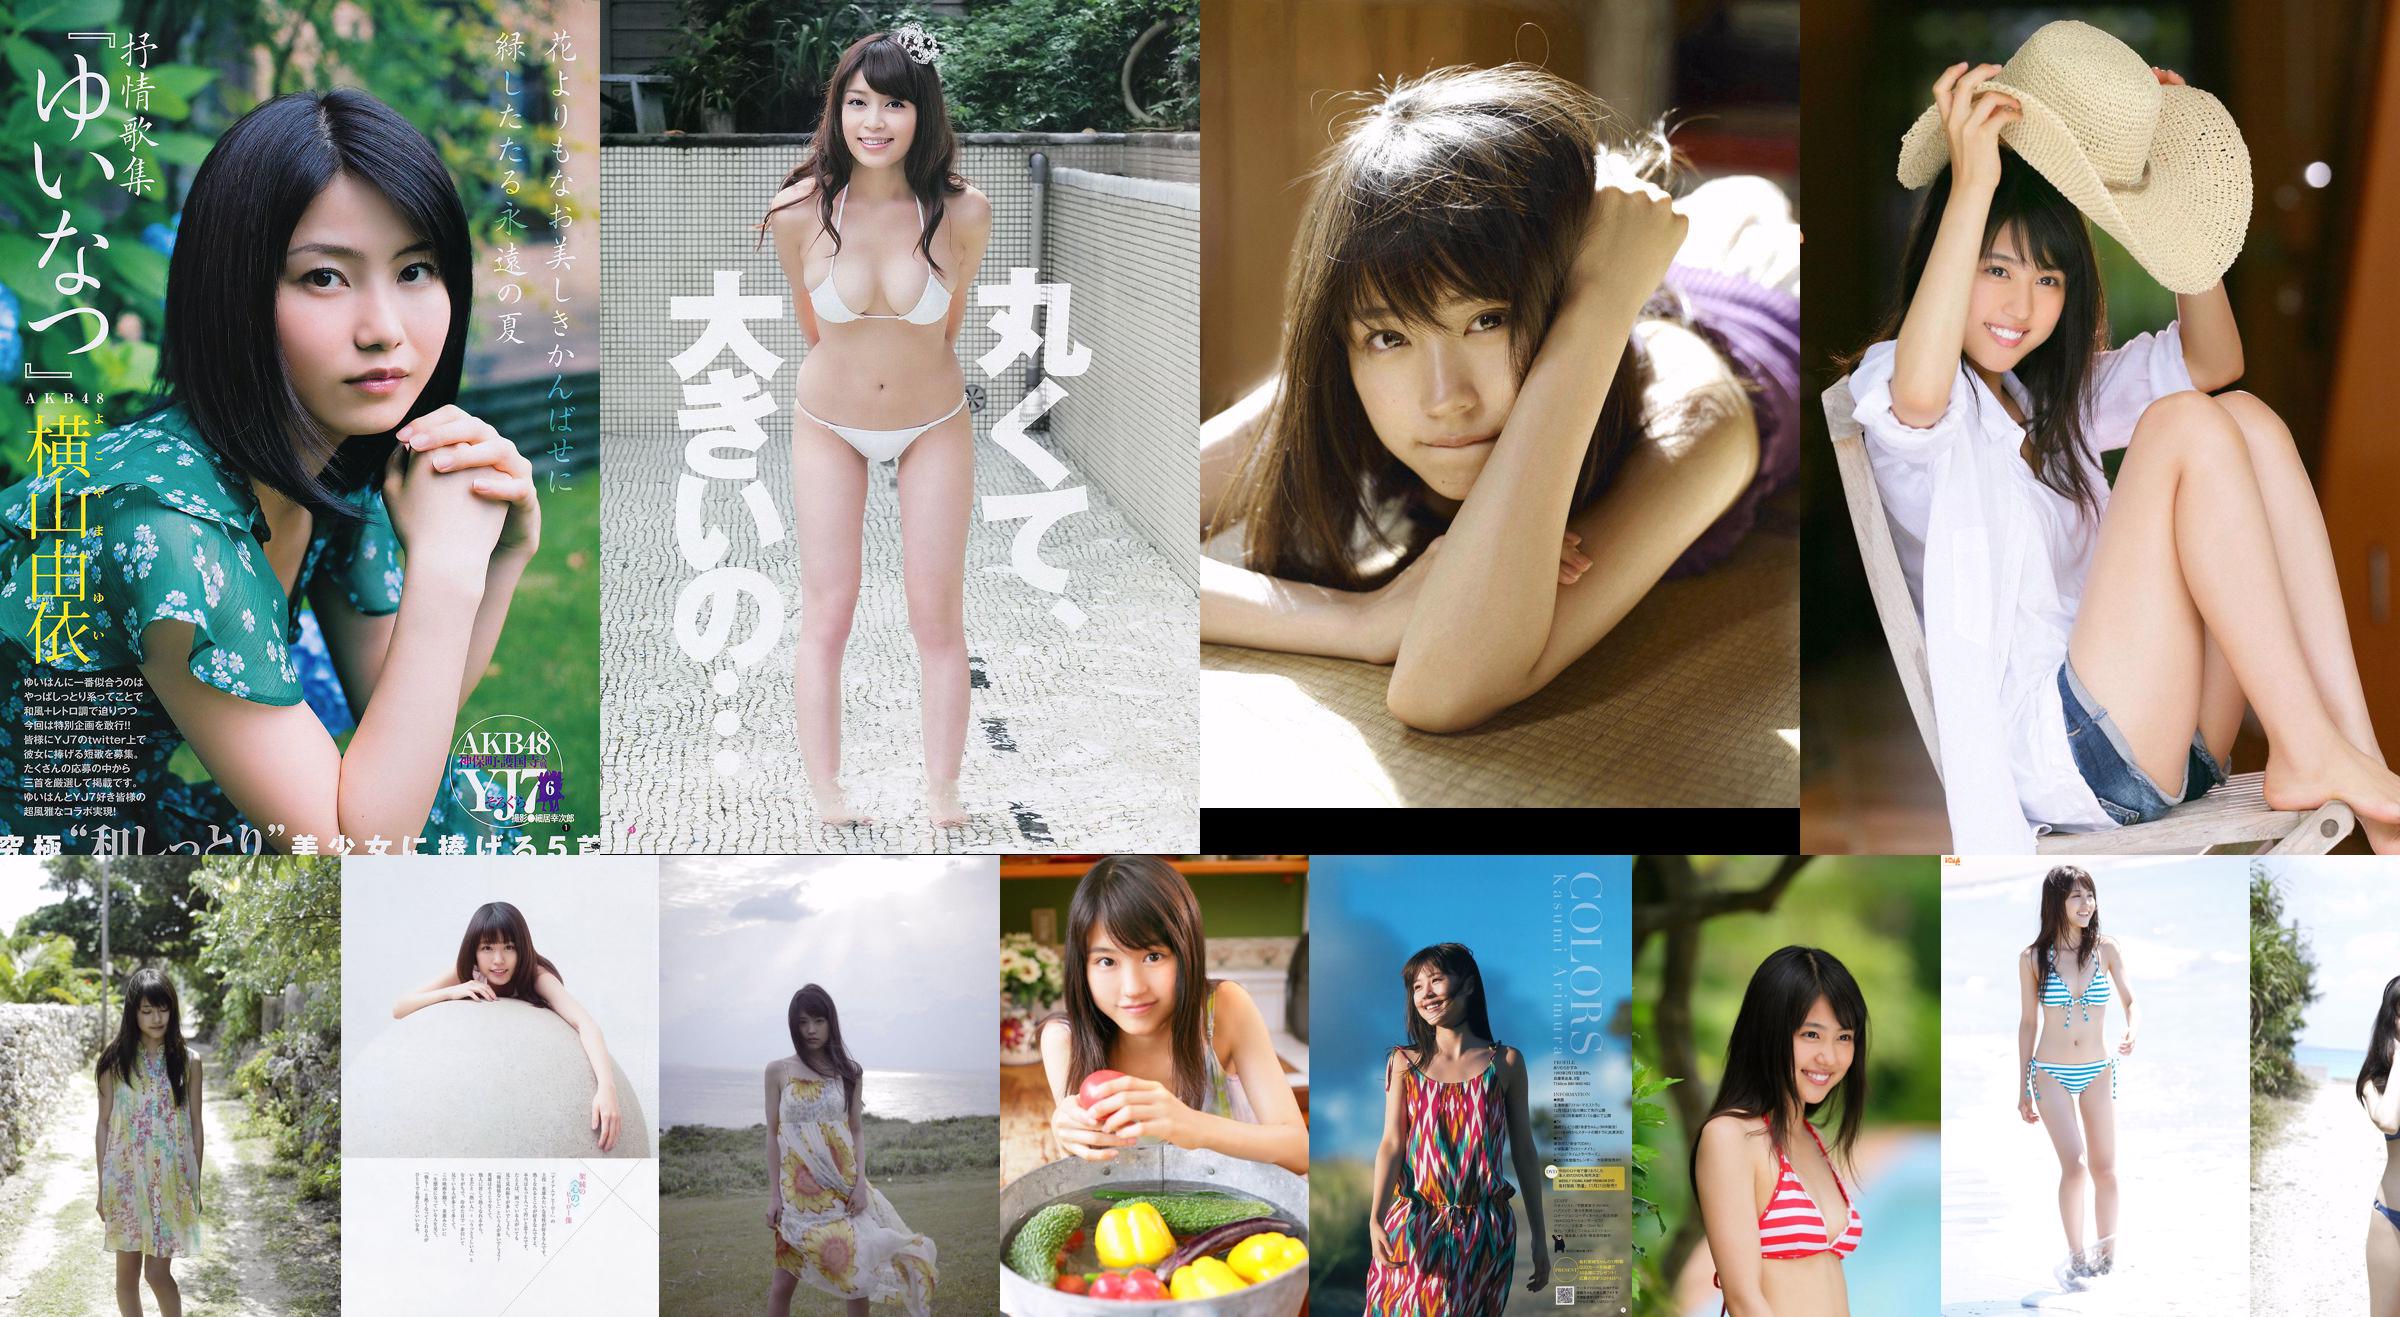 Kasumi Arimura "WPB 2012" No.338cff Halaman 10